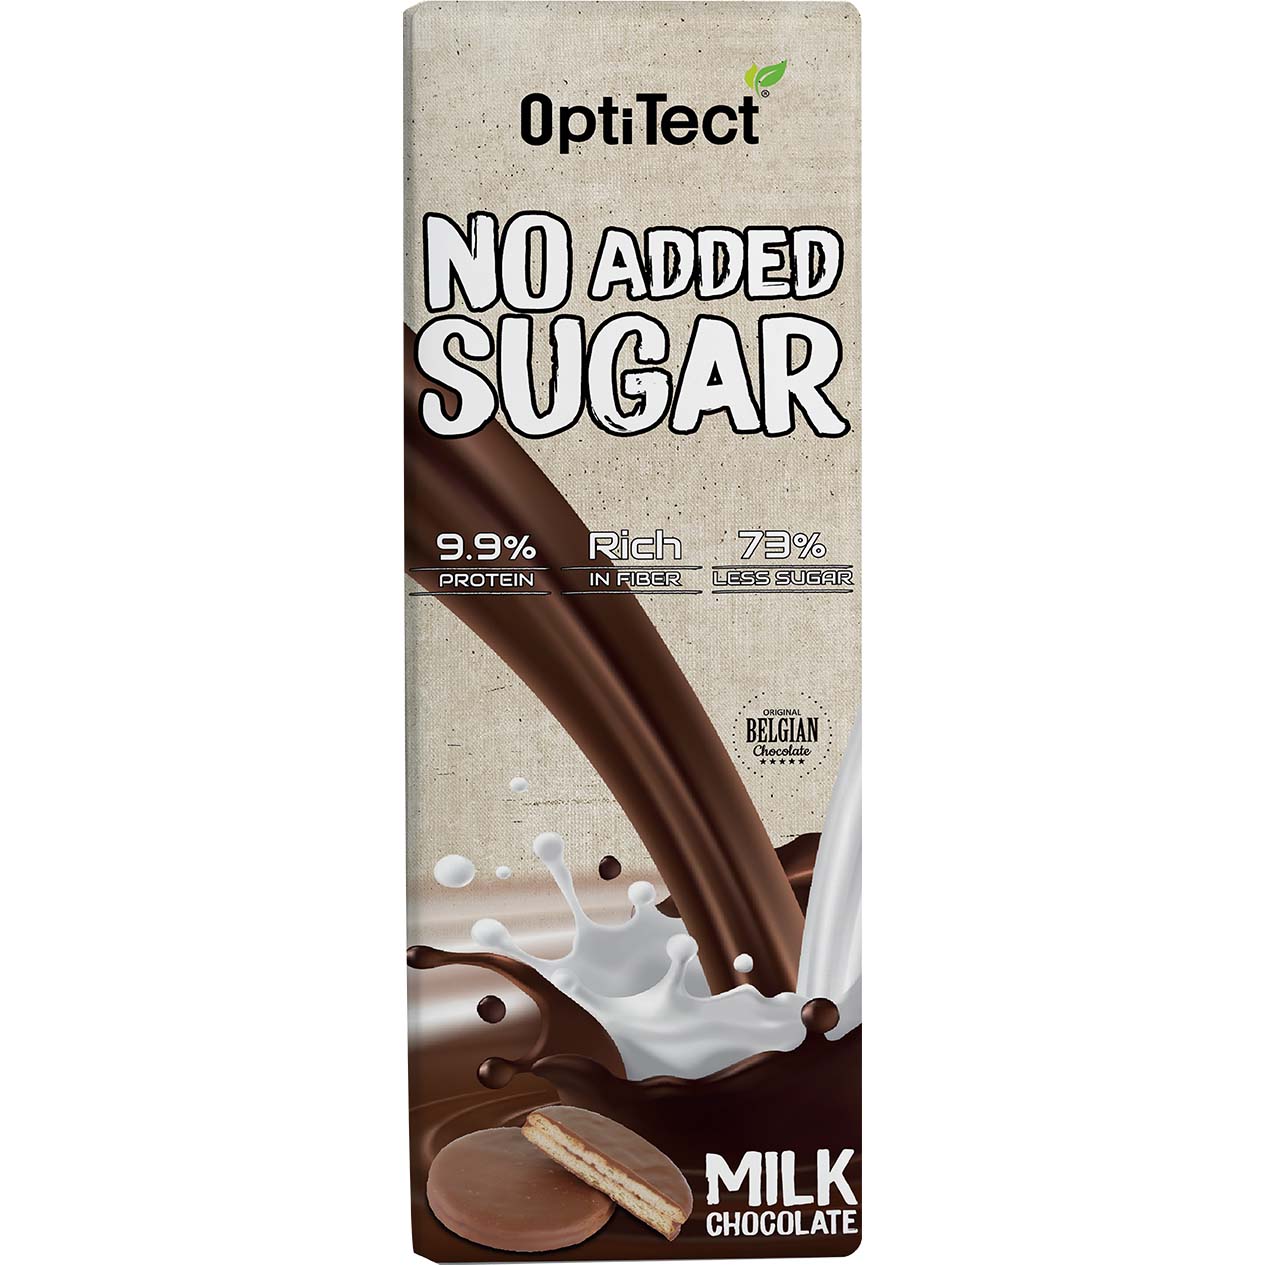 Optitect No Added Sugar Cookies, Milk Chocolate, 1 Bar